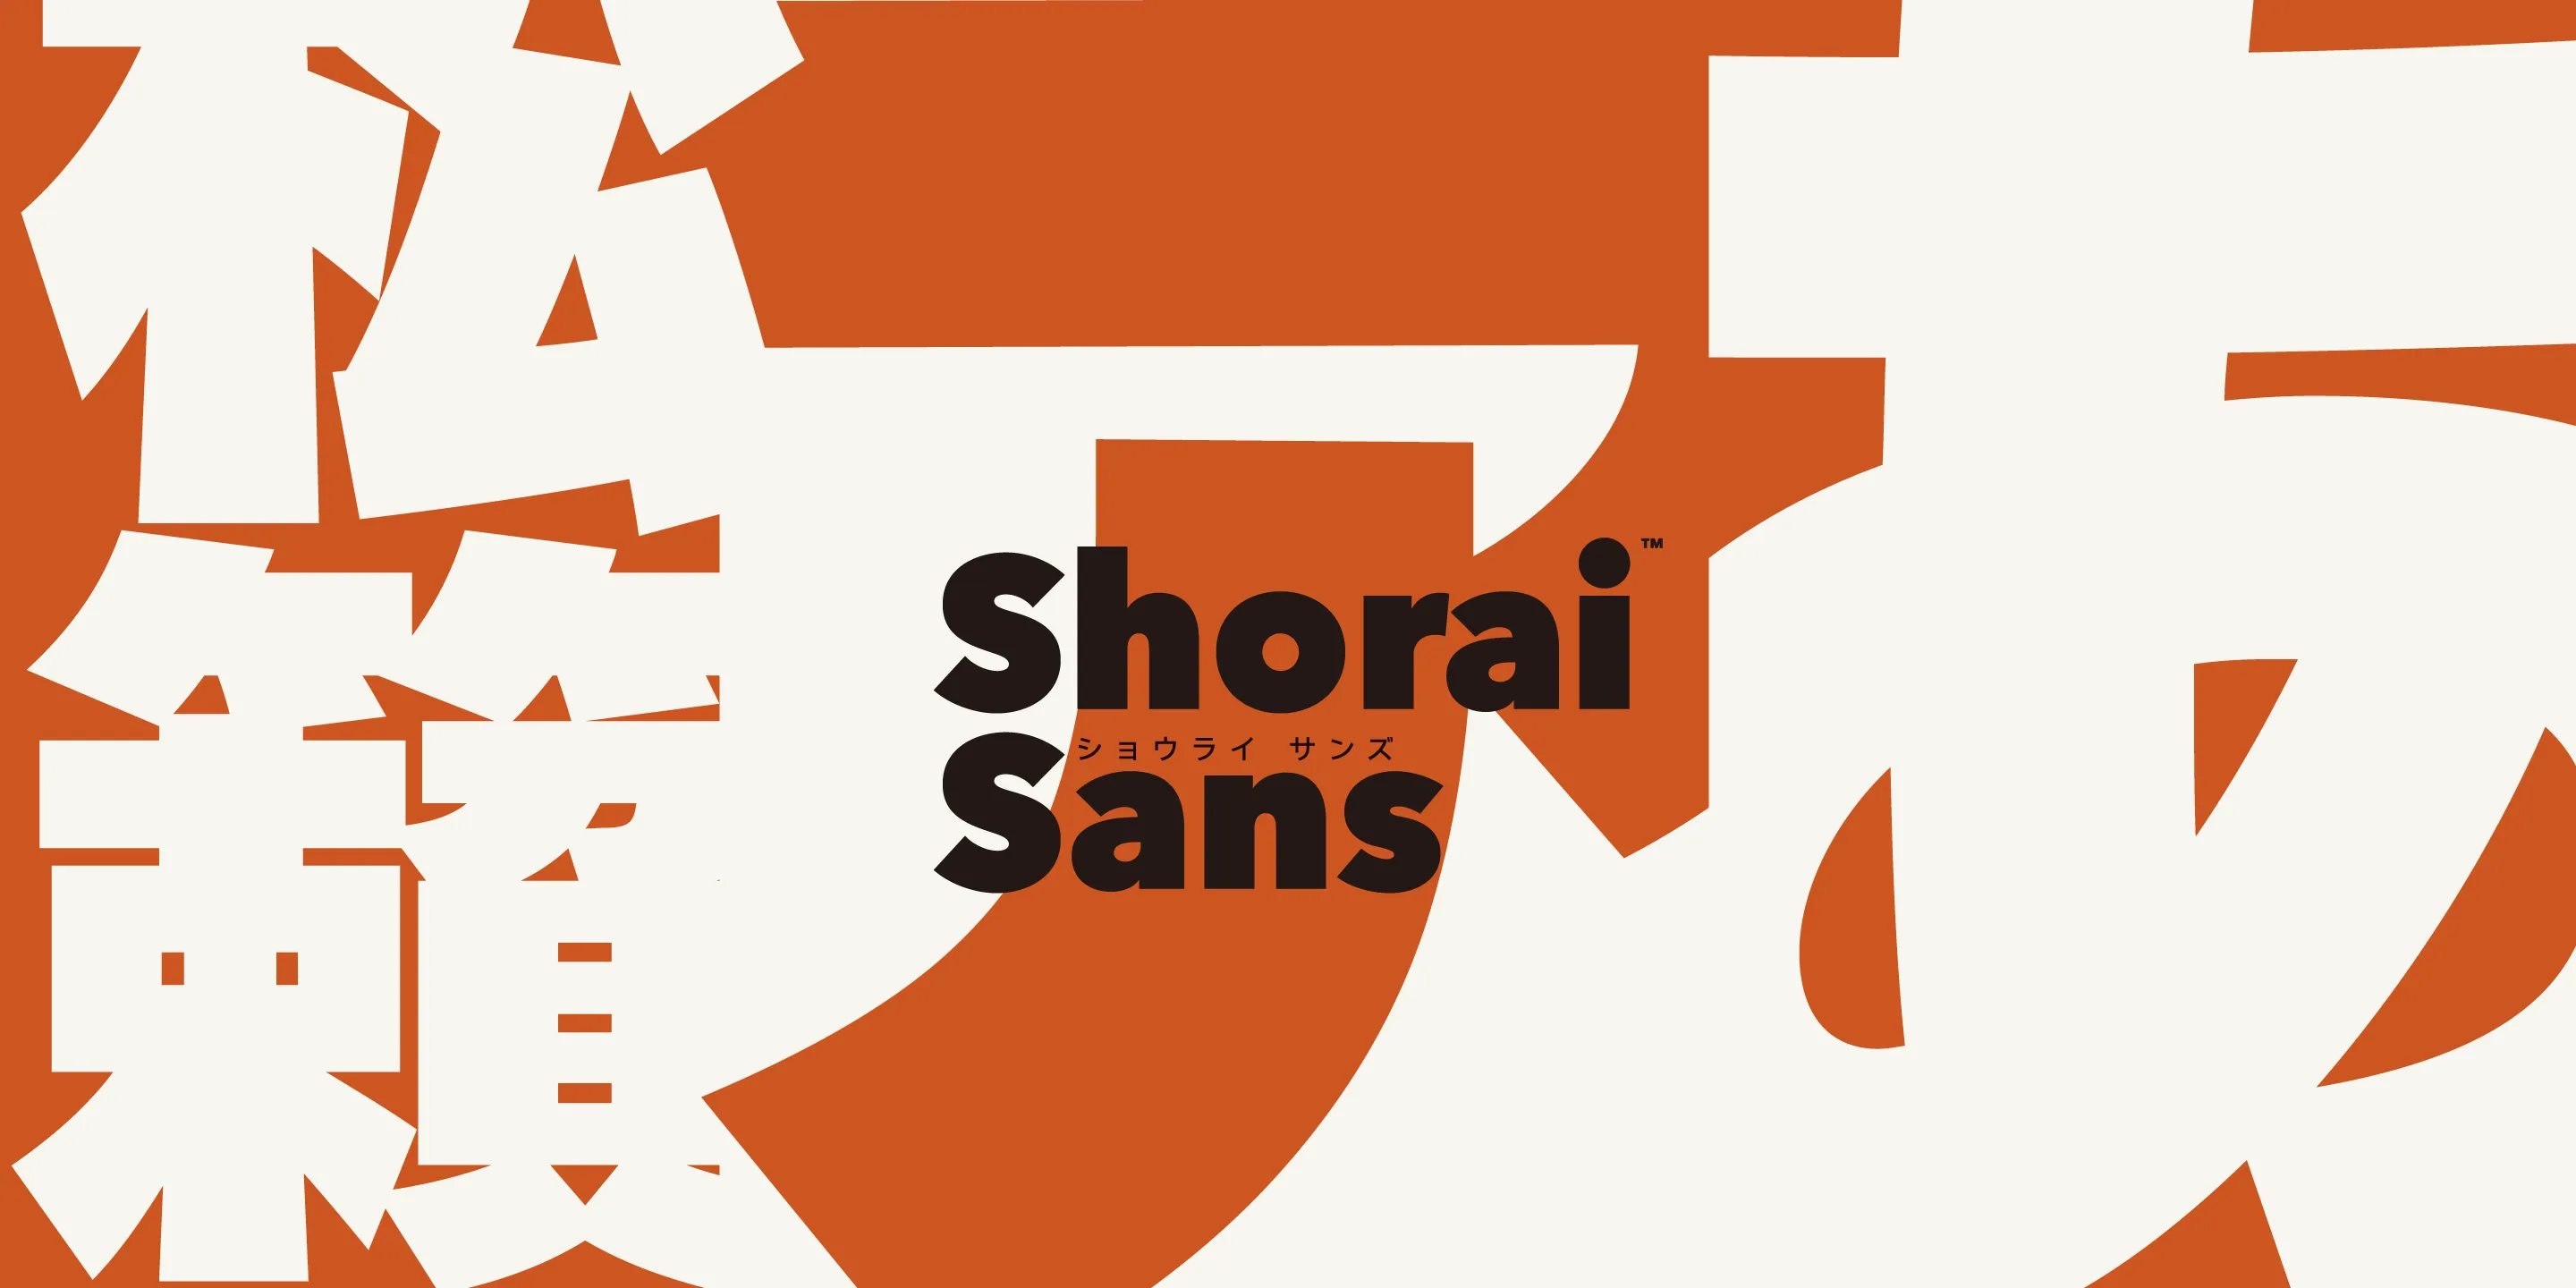 Shorai Sansの組み見本。極太のウェイトで書体の特徴を捉えている